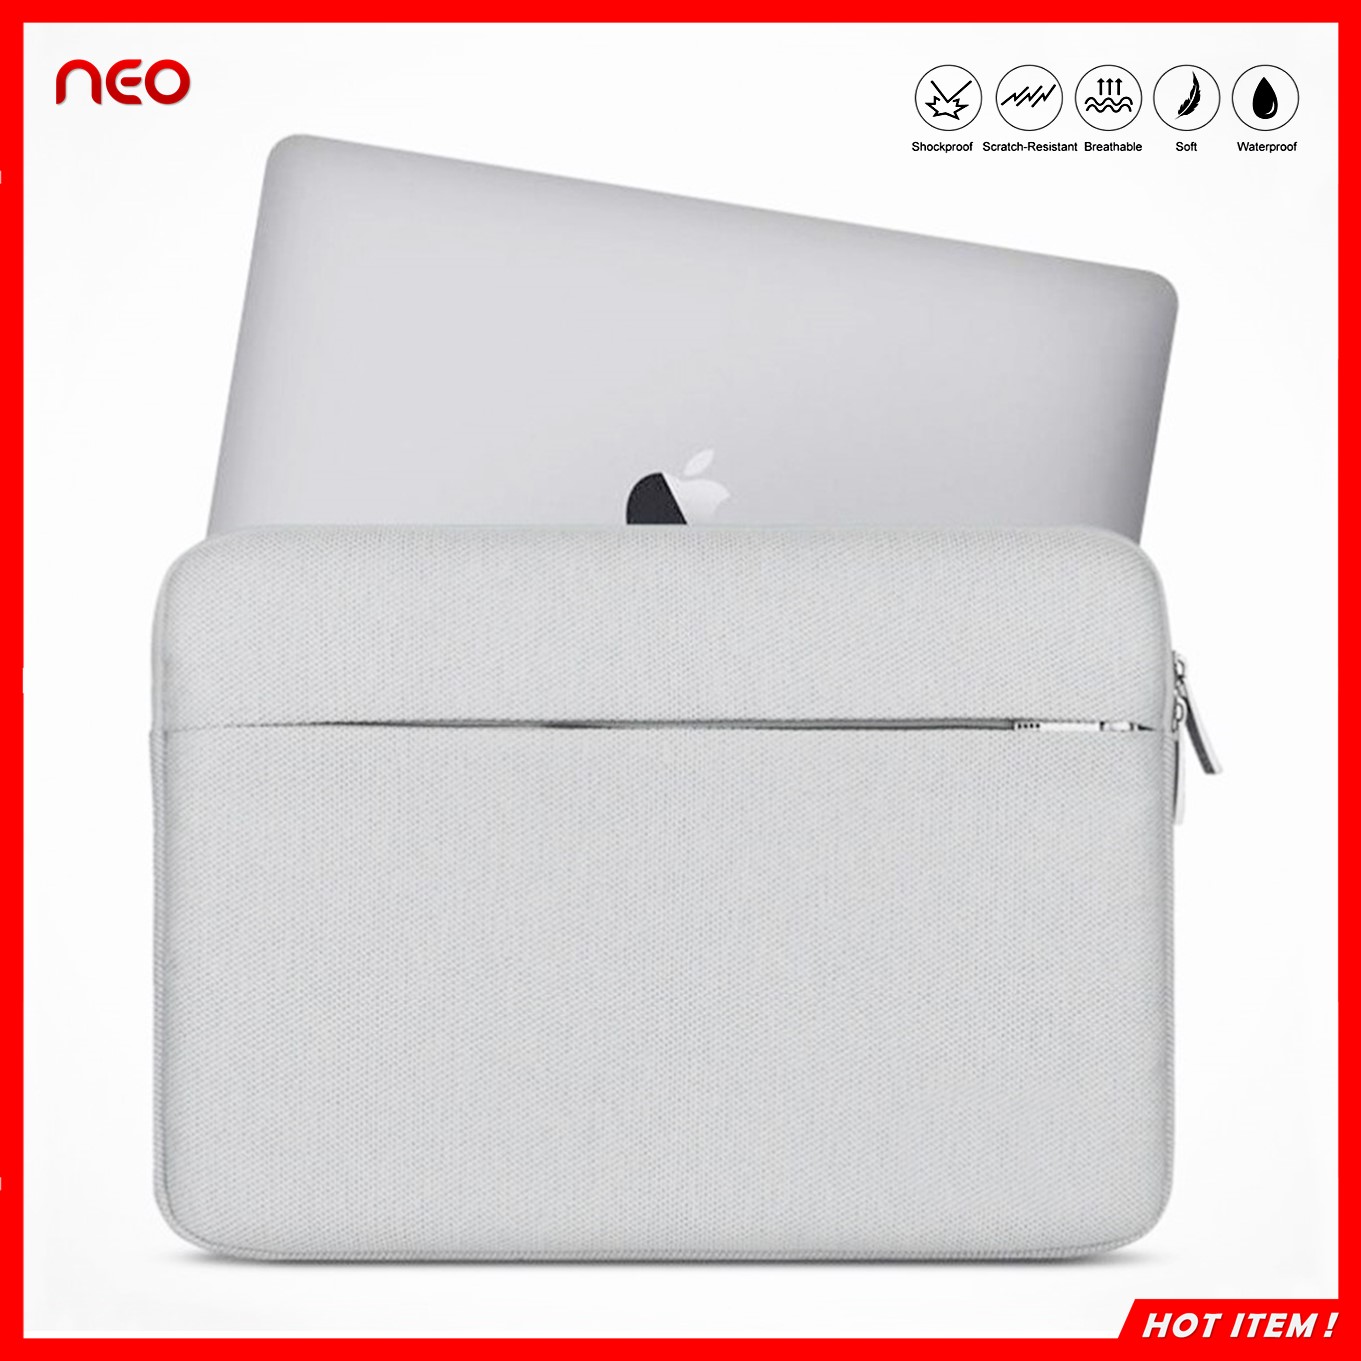 NEO เคสแล็ปท็อป กระเป๋าโน๊ตบุ๊ค Soft Case 13.3 14 15.6 นิ้ว เคสMacbook Air Pro ซองใส่โน๊ตบุ๊ค กันฝุ่น กันรอย กันกระแทก Laptop Bag Macbook Sleeve Case 13.3 14 15 15.6 inch HP Lenovo ACER